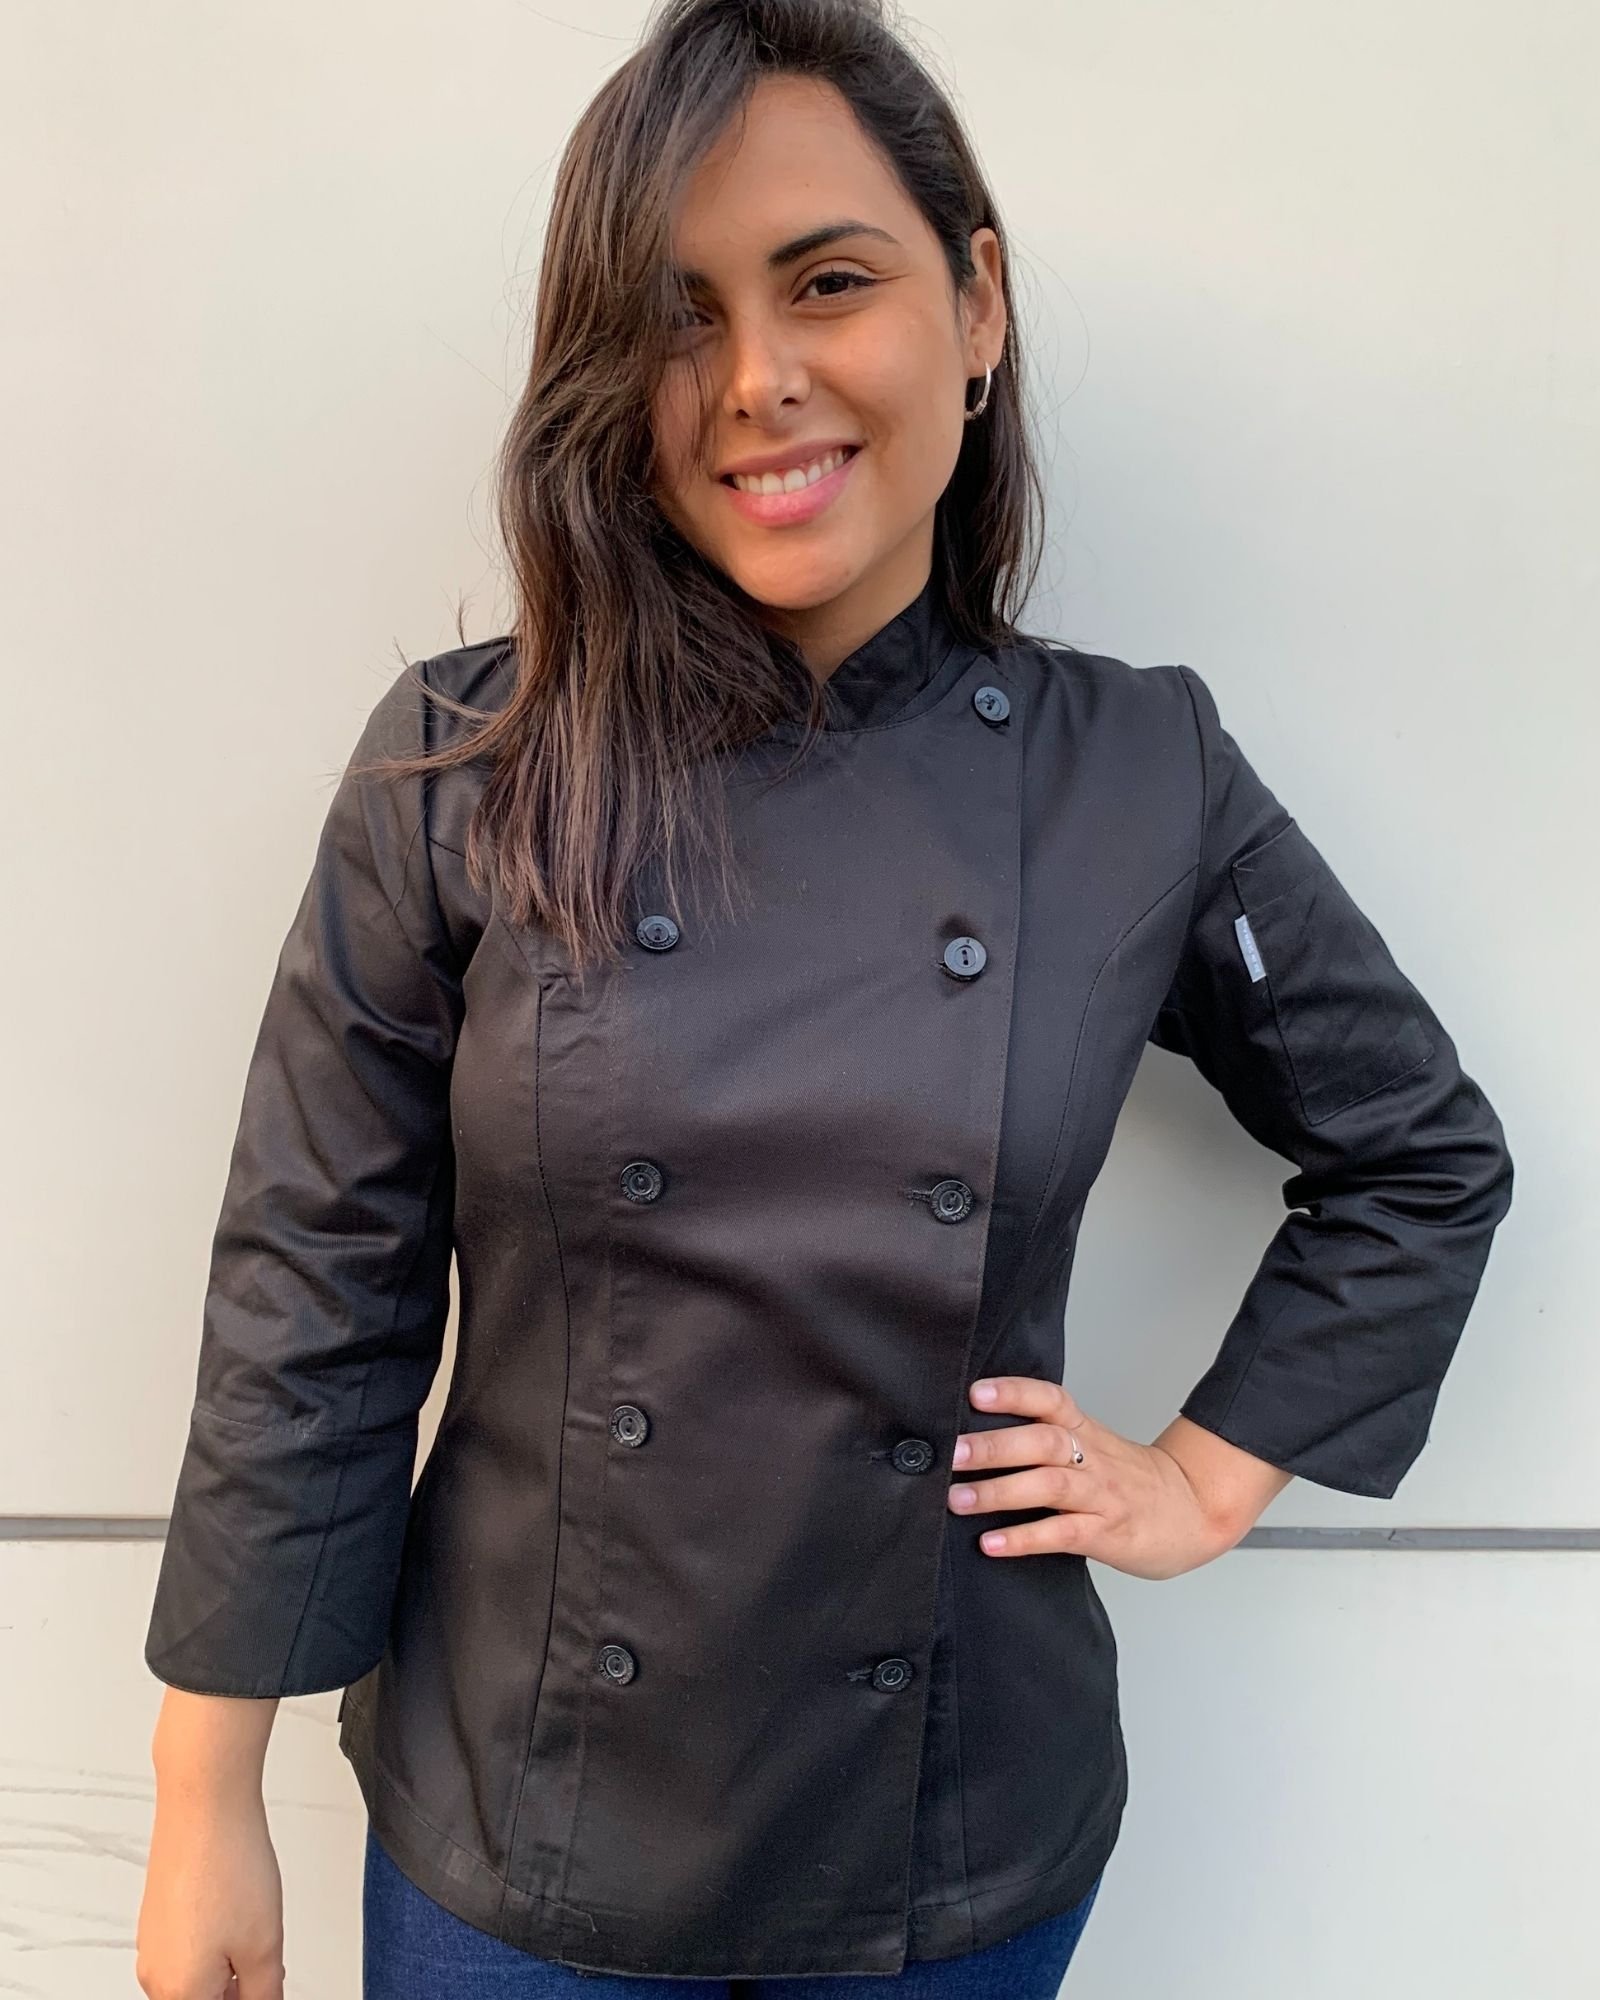 Julín - Chaqueta Chef Mujer Cruzada negra